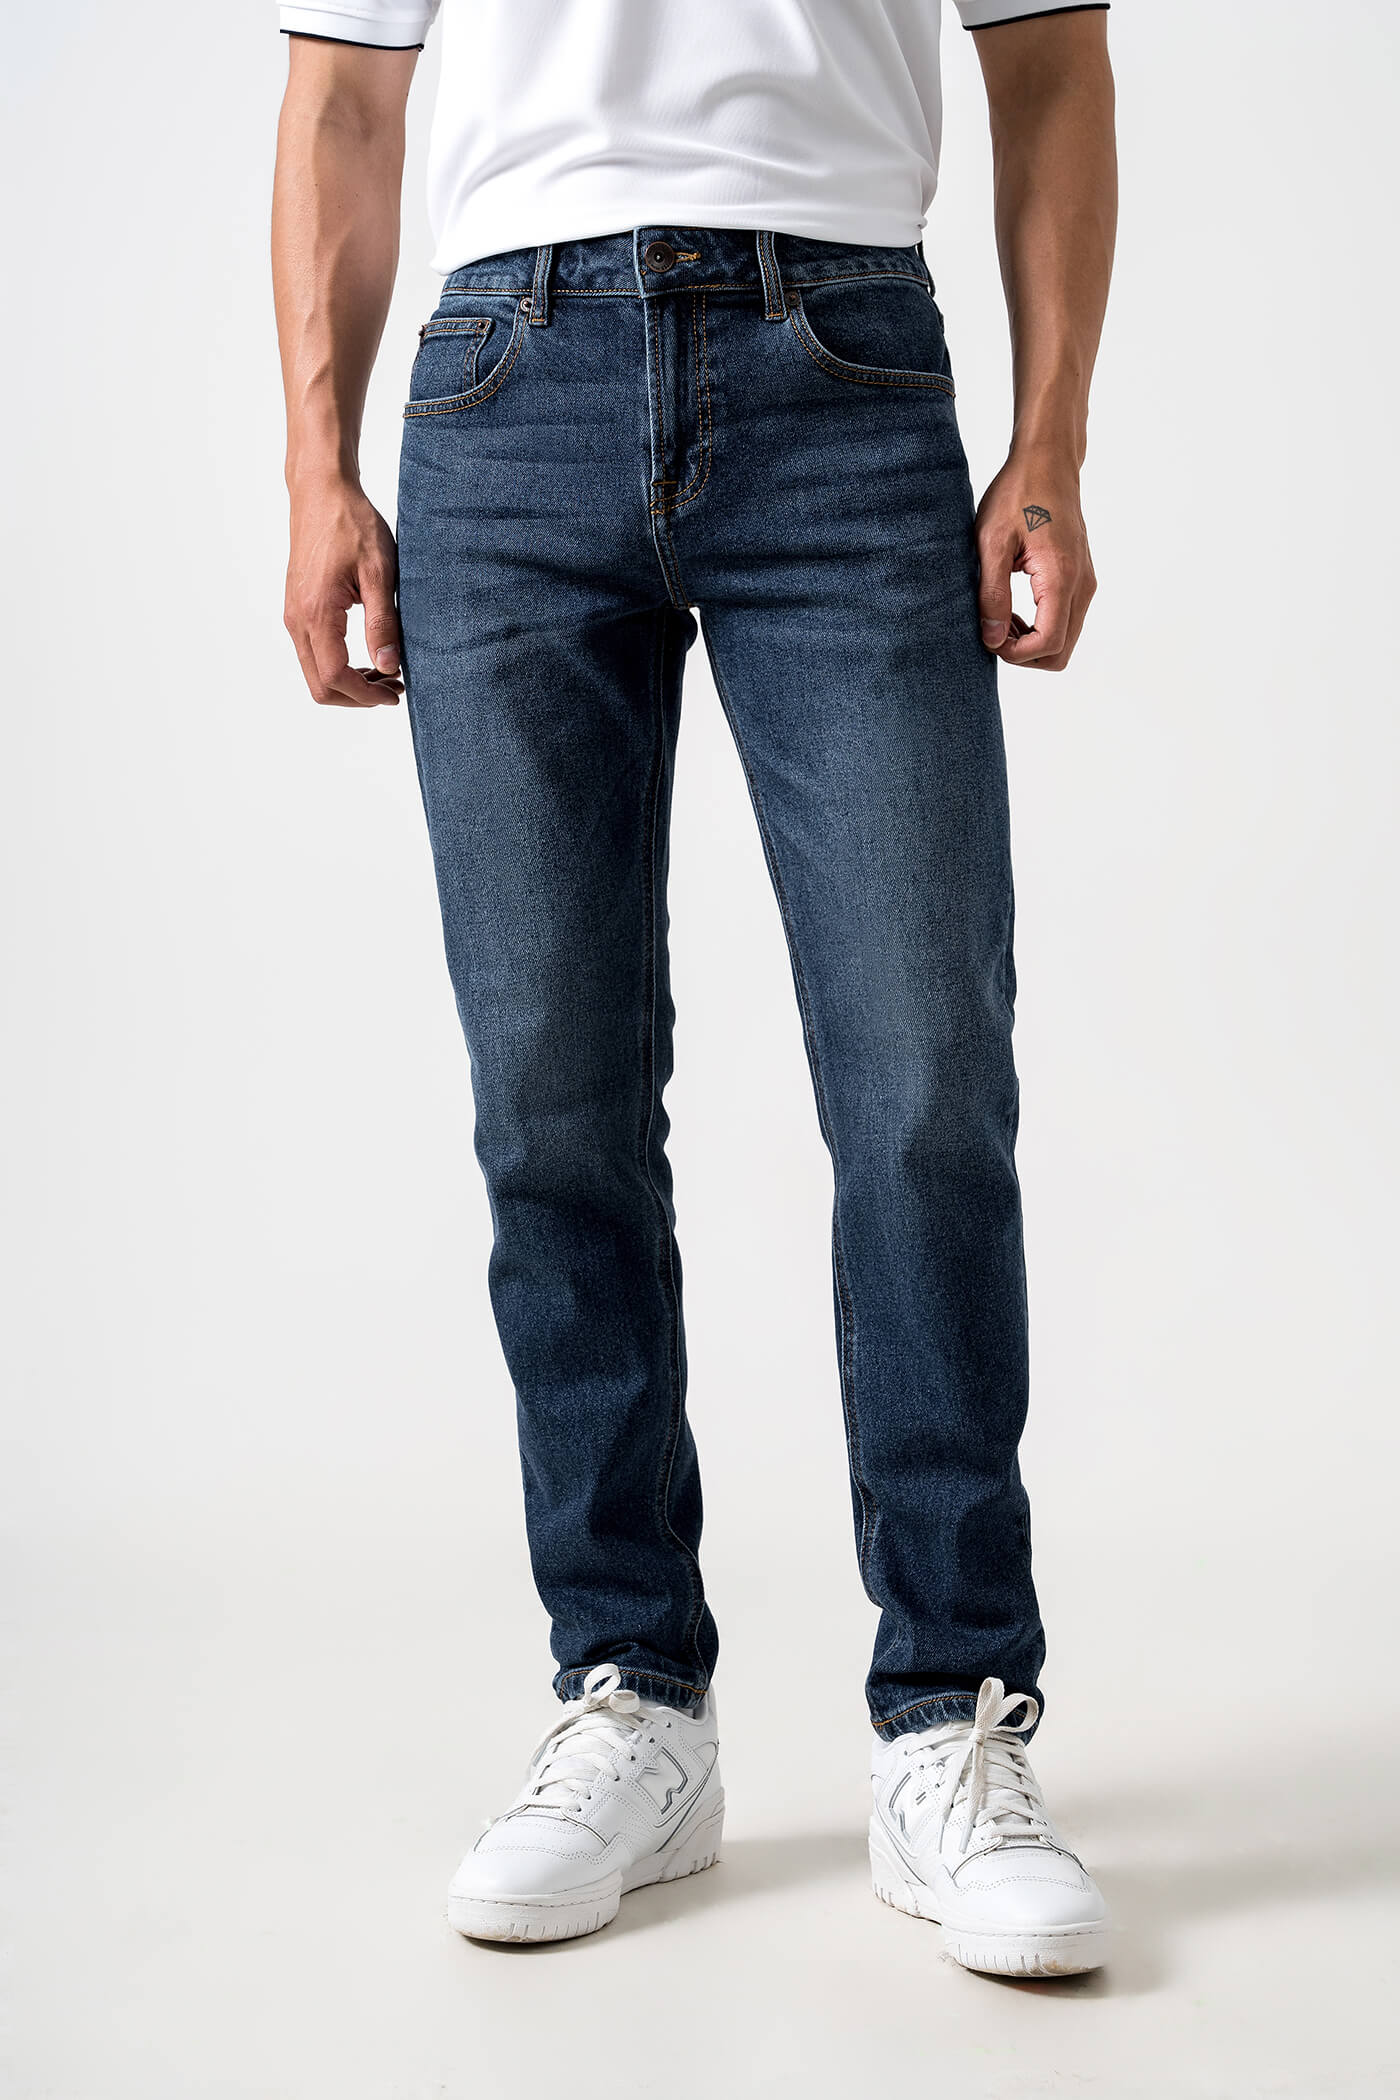 Coolmate x Copper Denim | Quần Jeans dáng Slim Fit xanh-dam 2